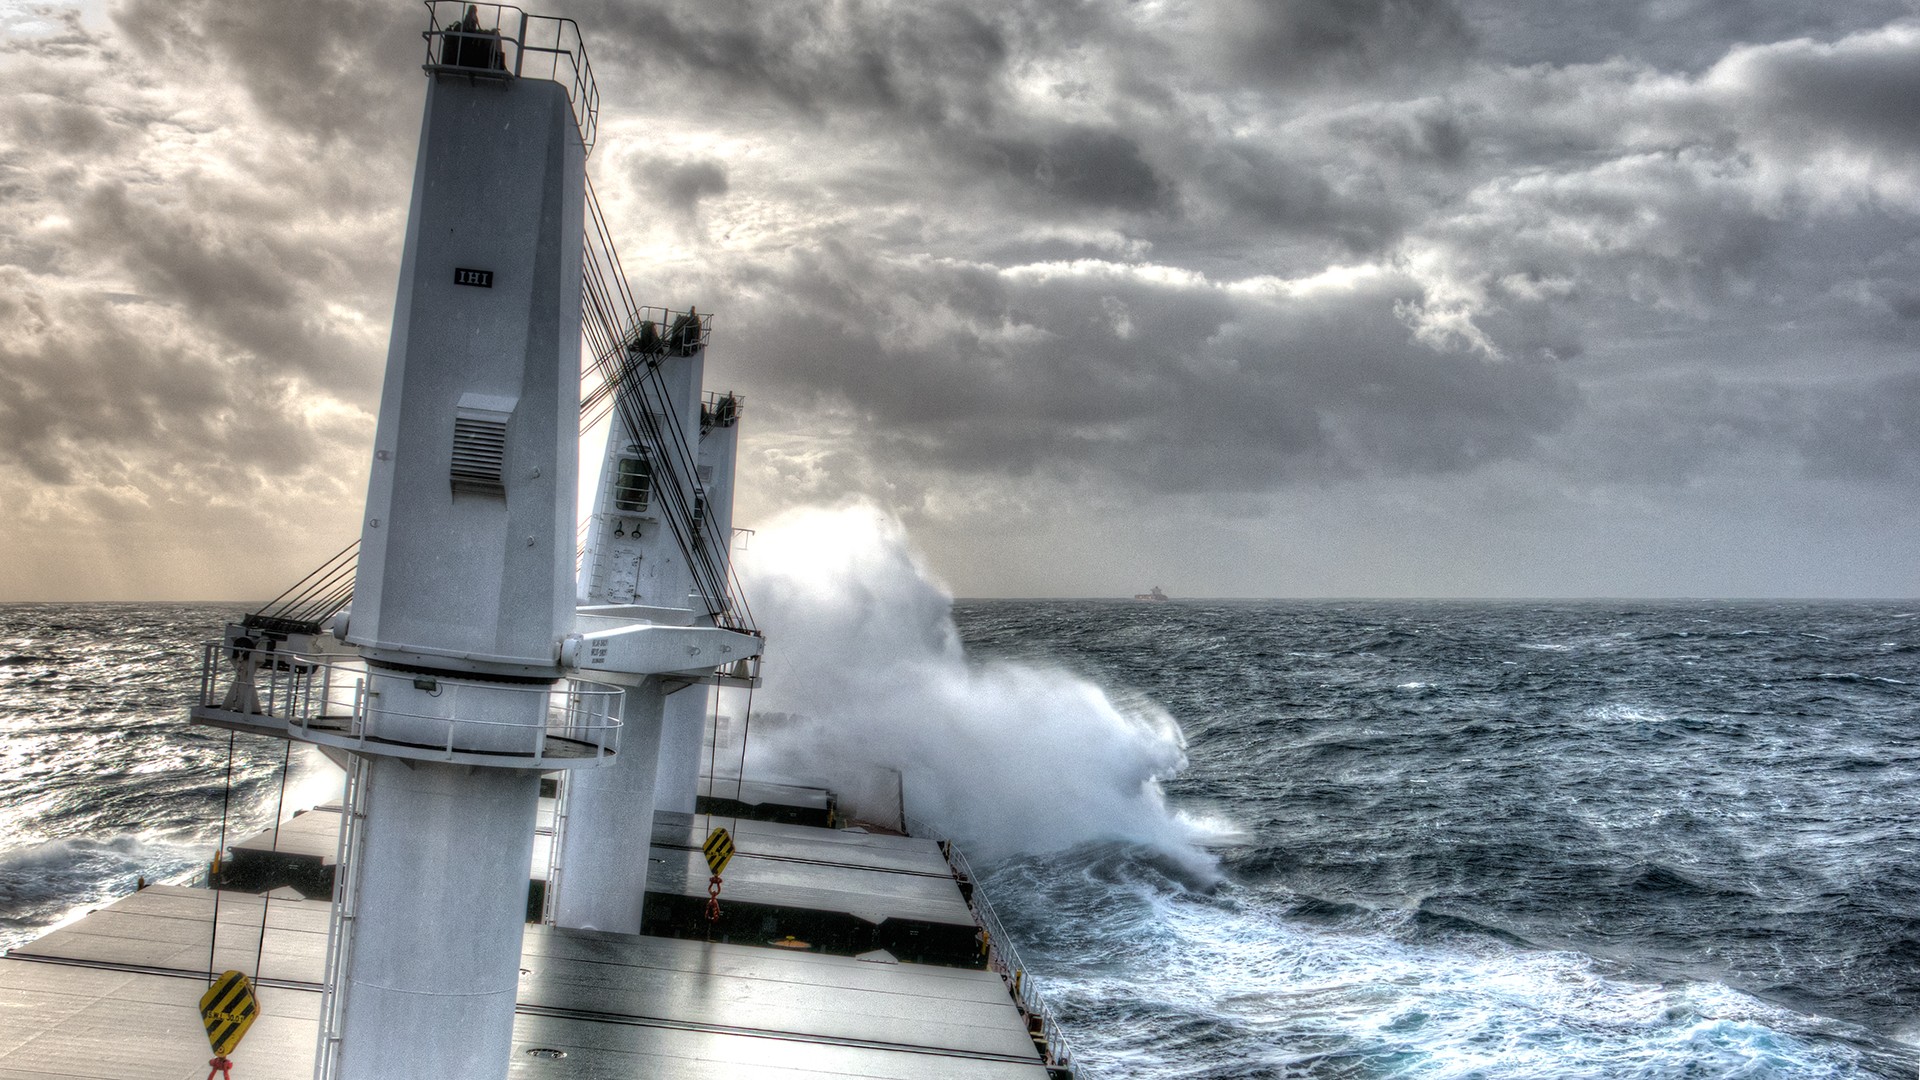 General 1920x1080 HDR sea ship storm